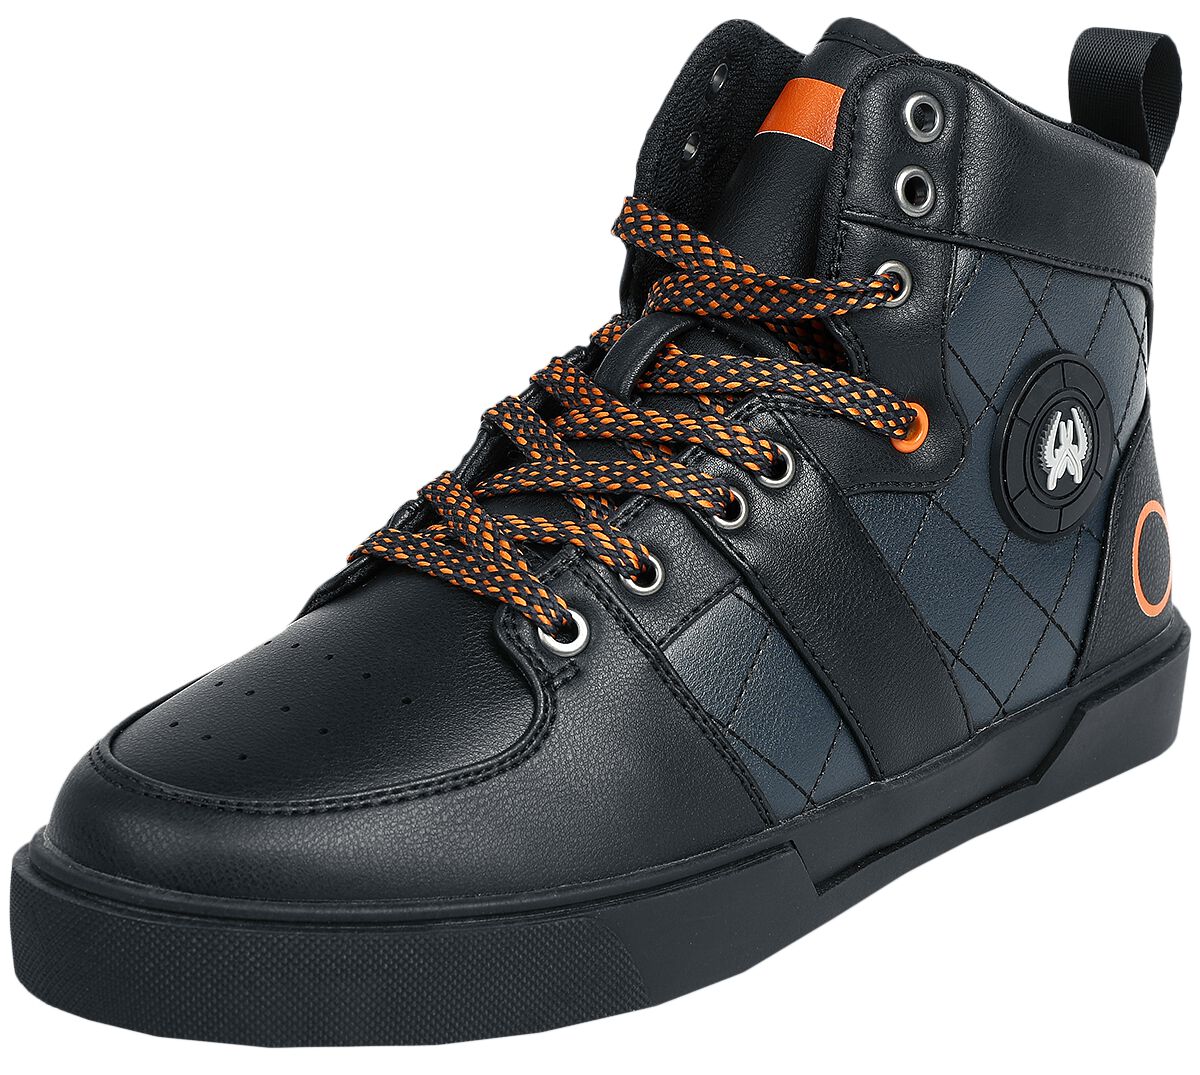 Counter-Strike - Gaming Sneaker high - Global Offensive - CS:GO - EU37 bis EU44 - Größe EU43 - schwarz/blau  - EMP exklusives Merchandise!